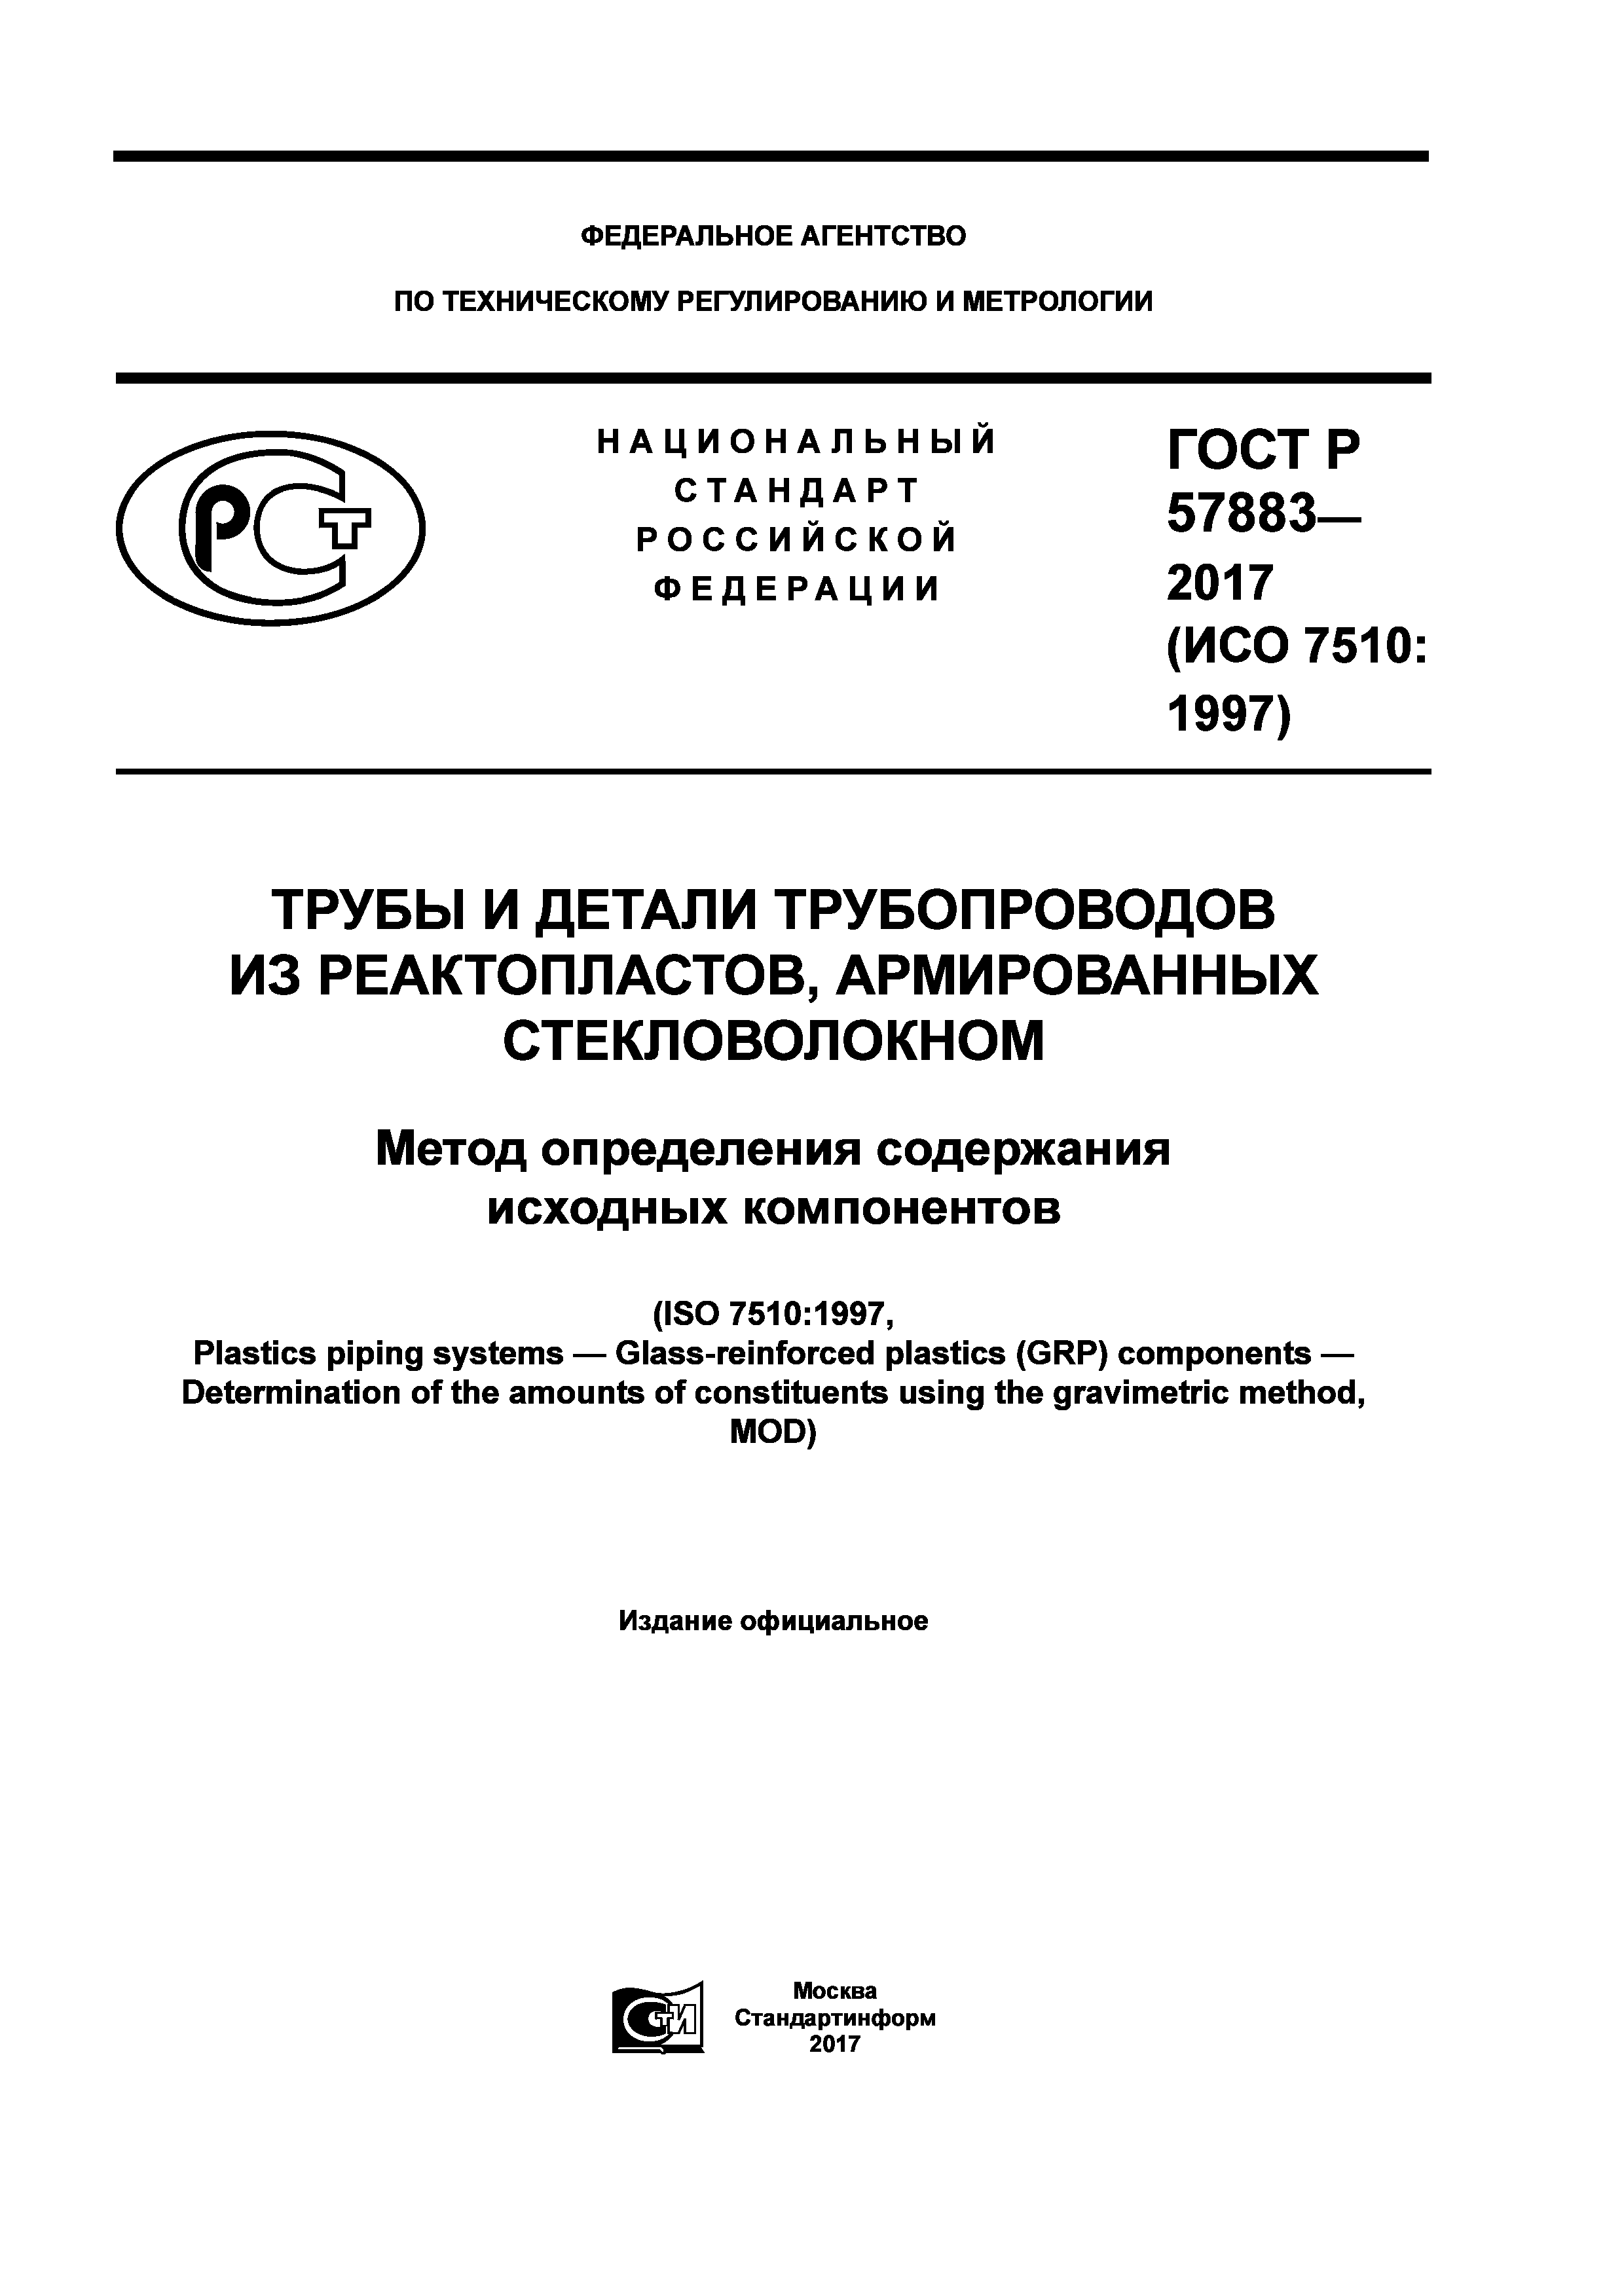 ГОСТ Р 57883-2017